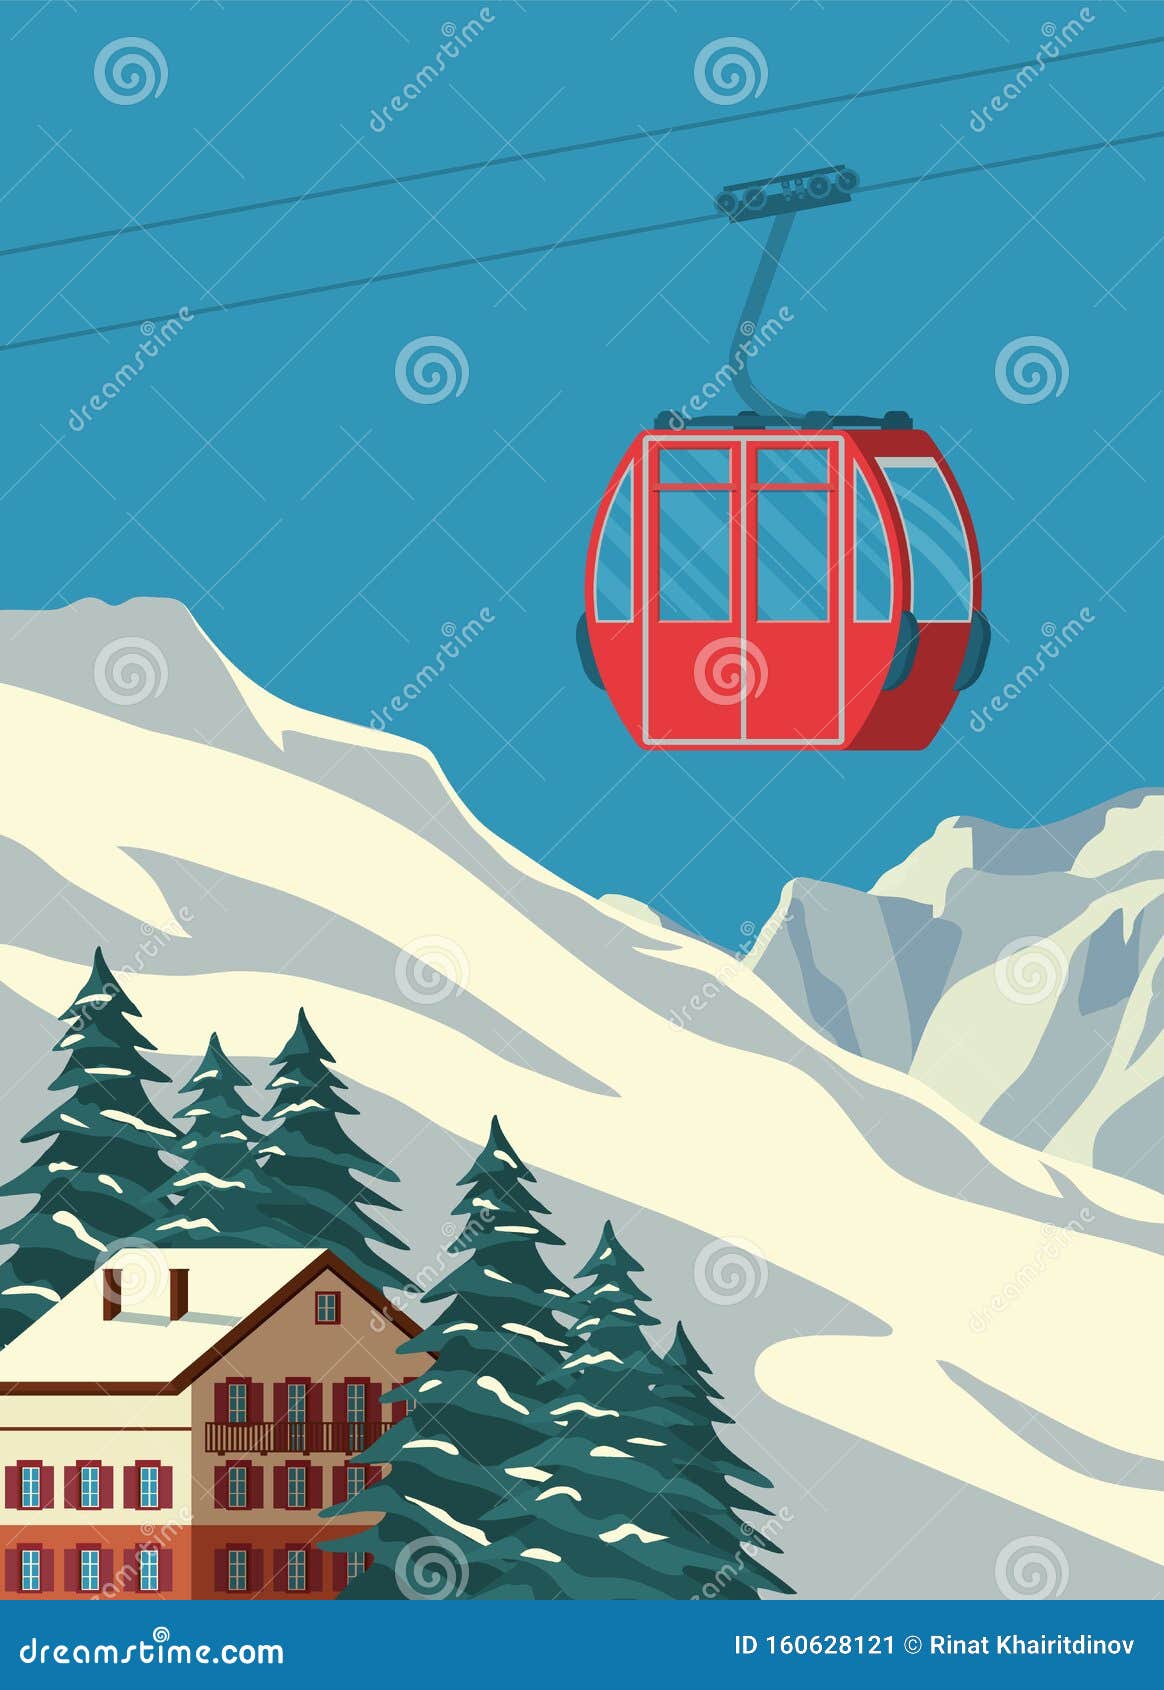 ski resort with red gondola lift, chalet, winter mountain landscape, snowy slopes. alps travel retro poster, vintage.